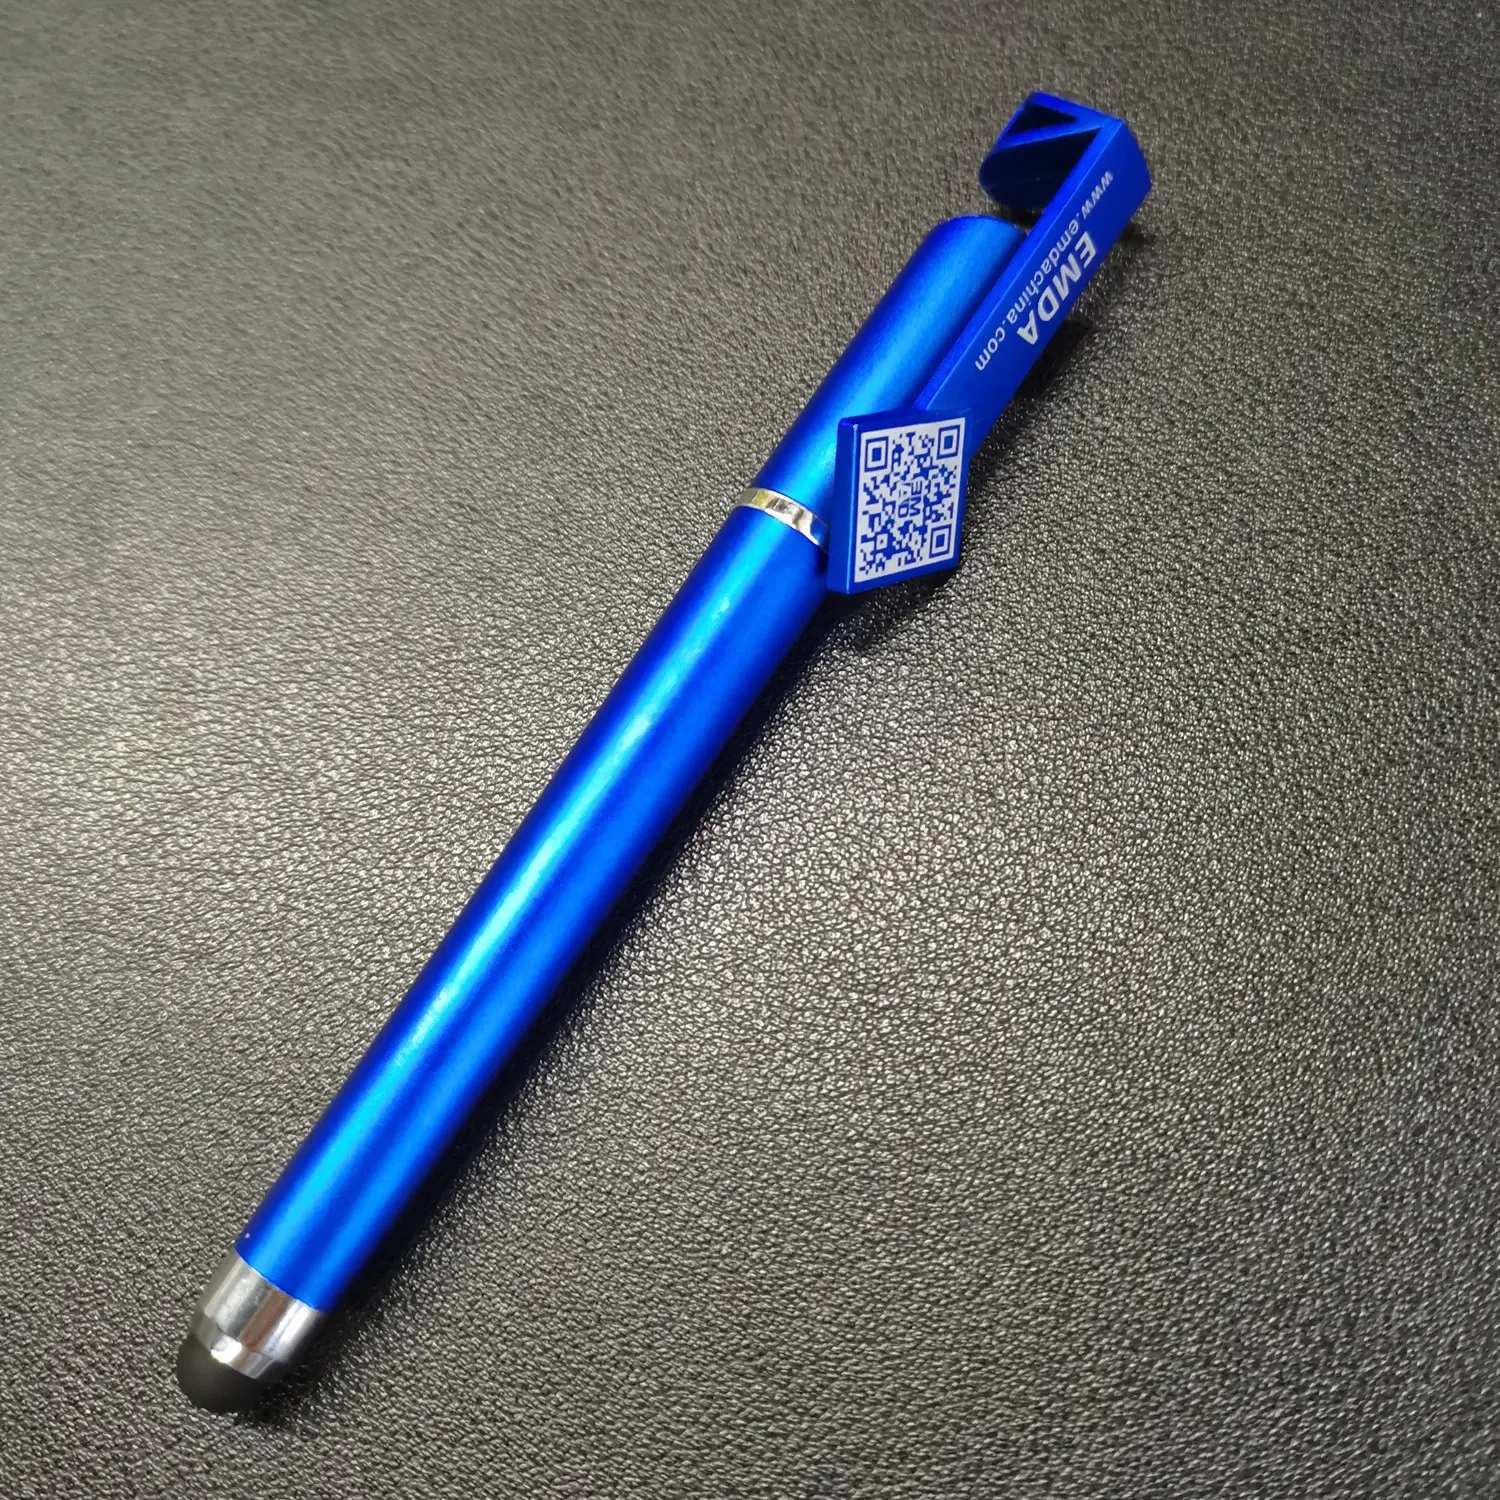 Venta al por mayor de bolígrafos Stylus de pantalla táctil suave soporte para teléfono bolígrafo de gel de oficina azul 3 en 1 bolígrafos multifunción con logotipo personalizado